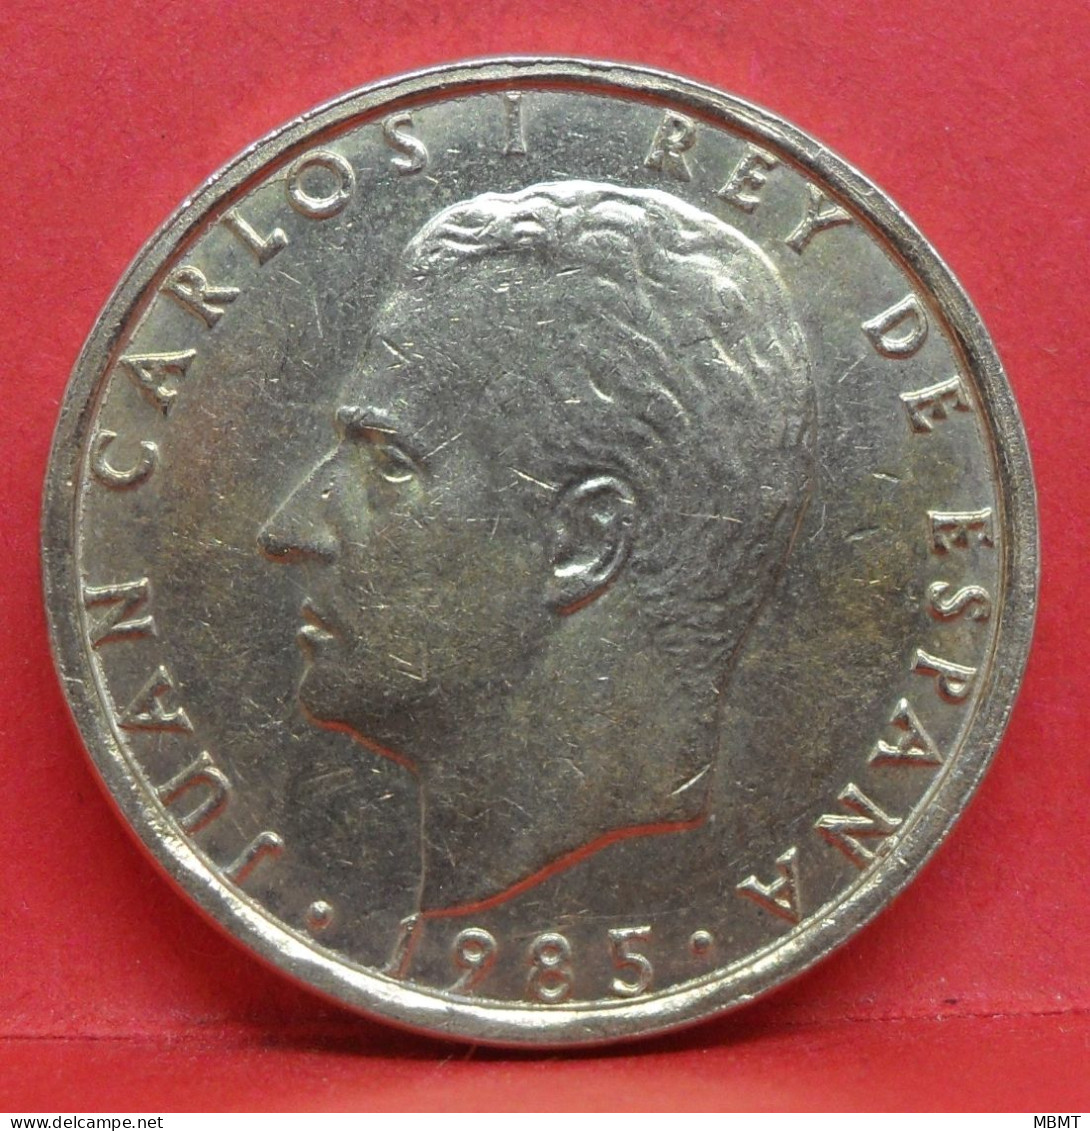 100 Pesetas 1985 - TTB - Pièce Monnaie Espagne - Article N°2495 - 100 Pesetas